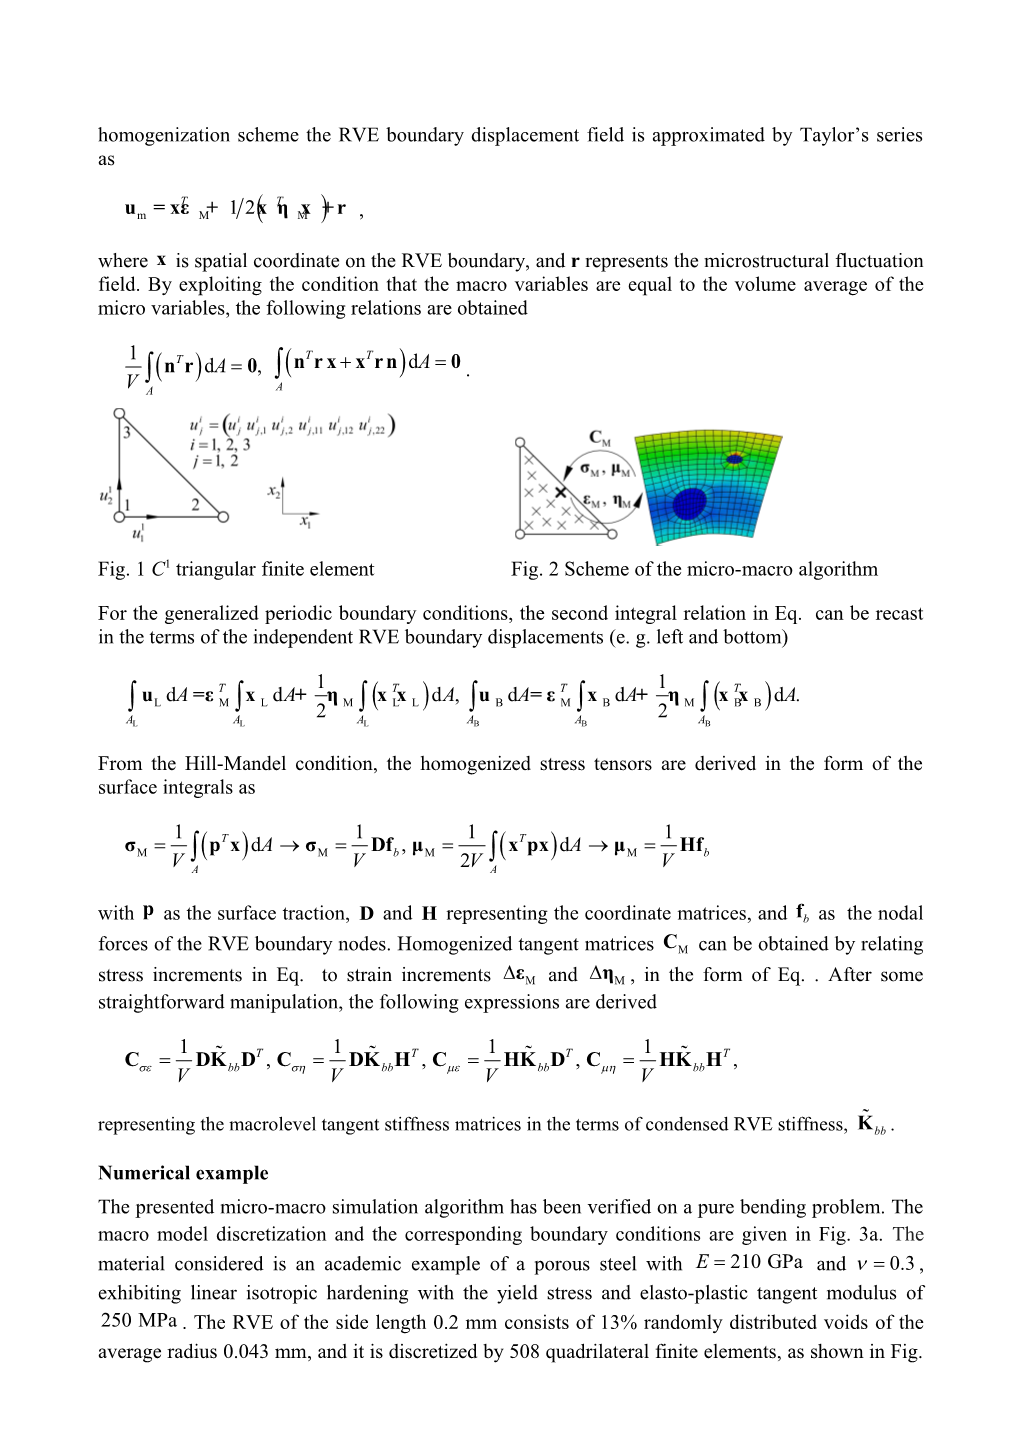 Boundary Conditions in a Multiscale Homogenization Procedure